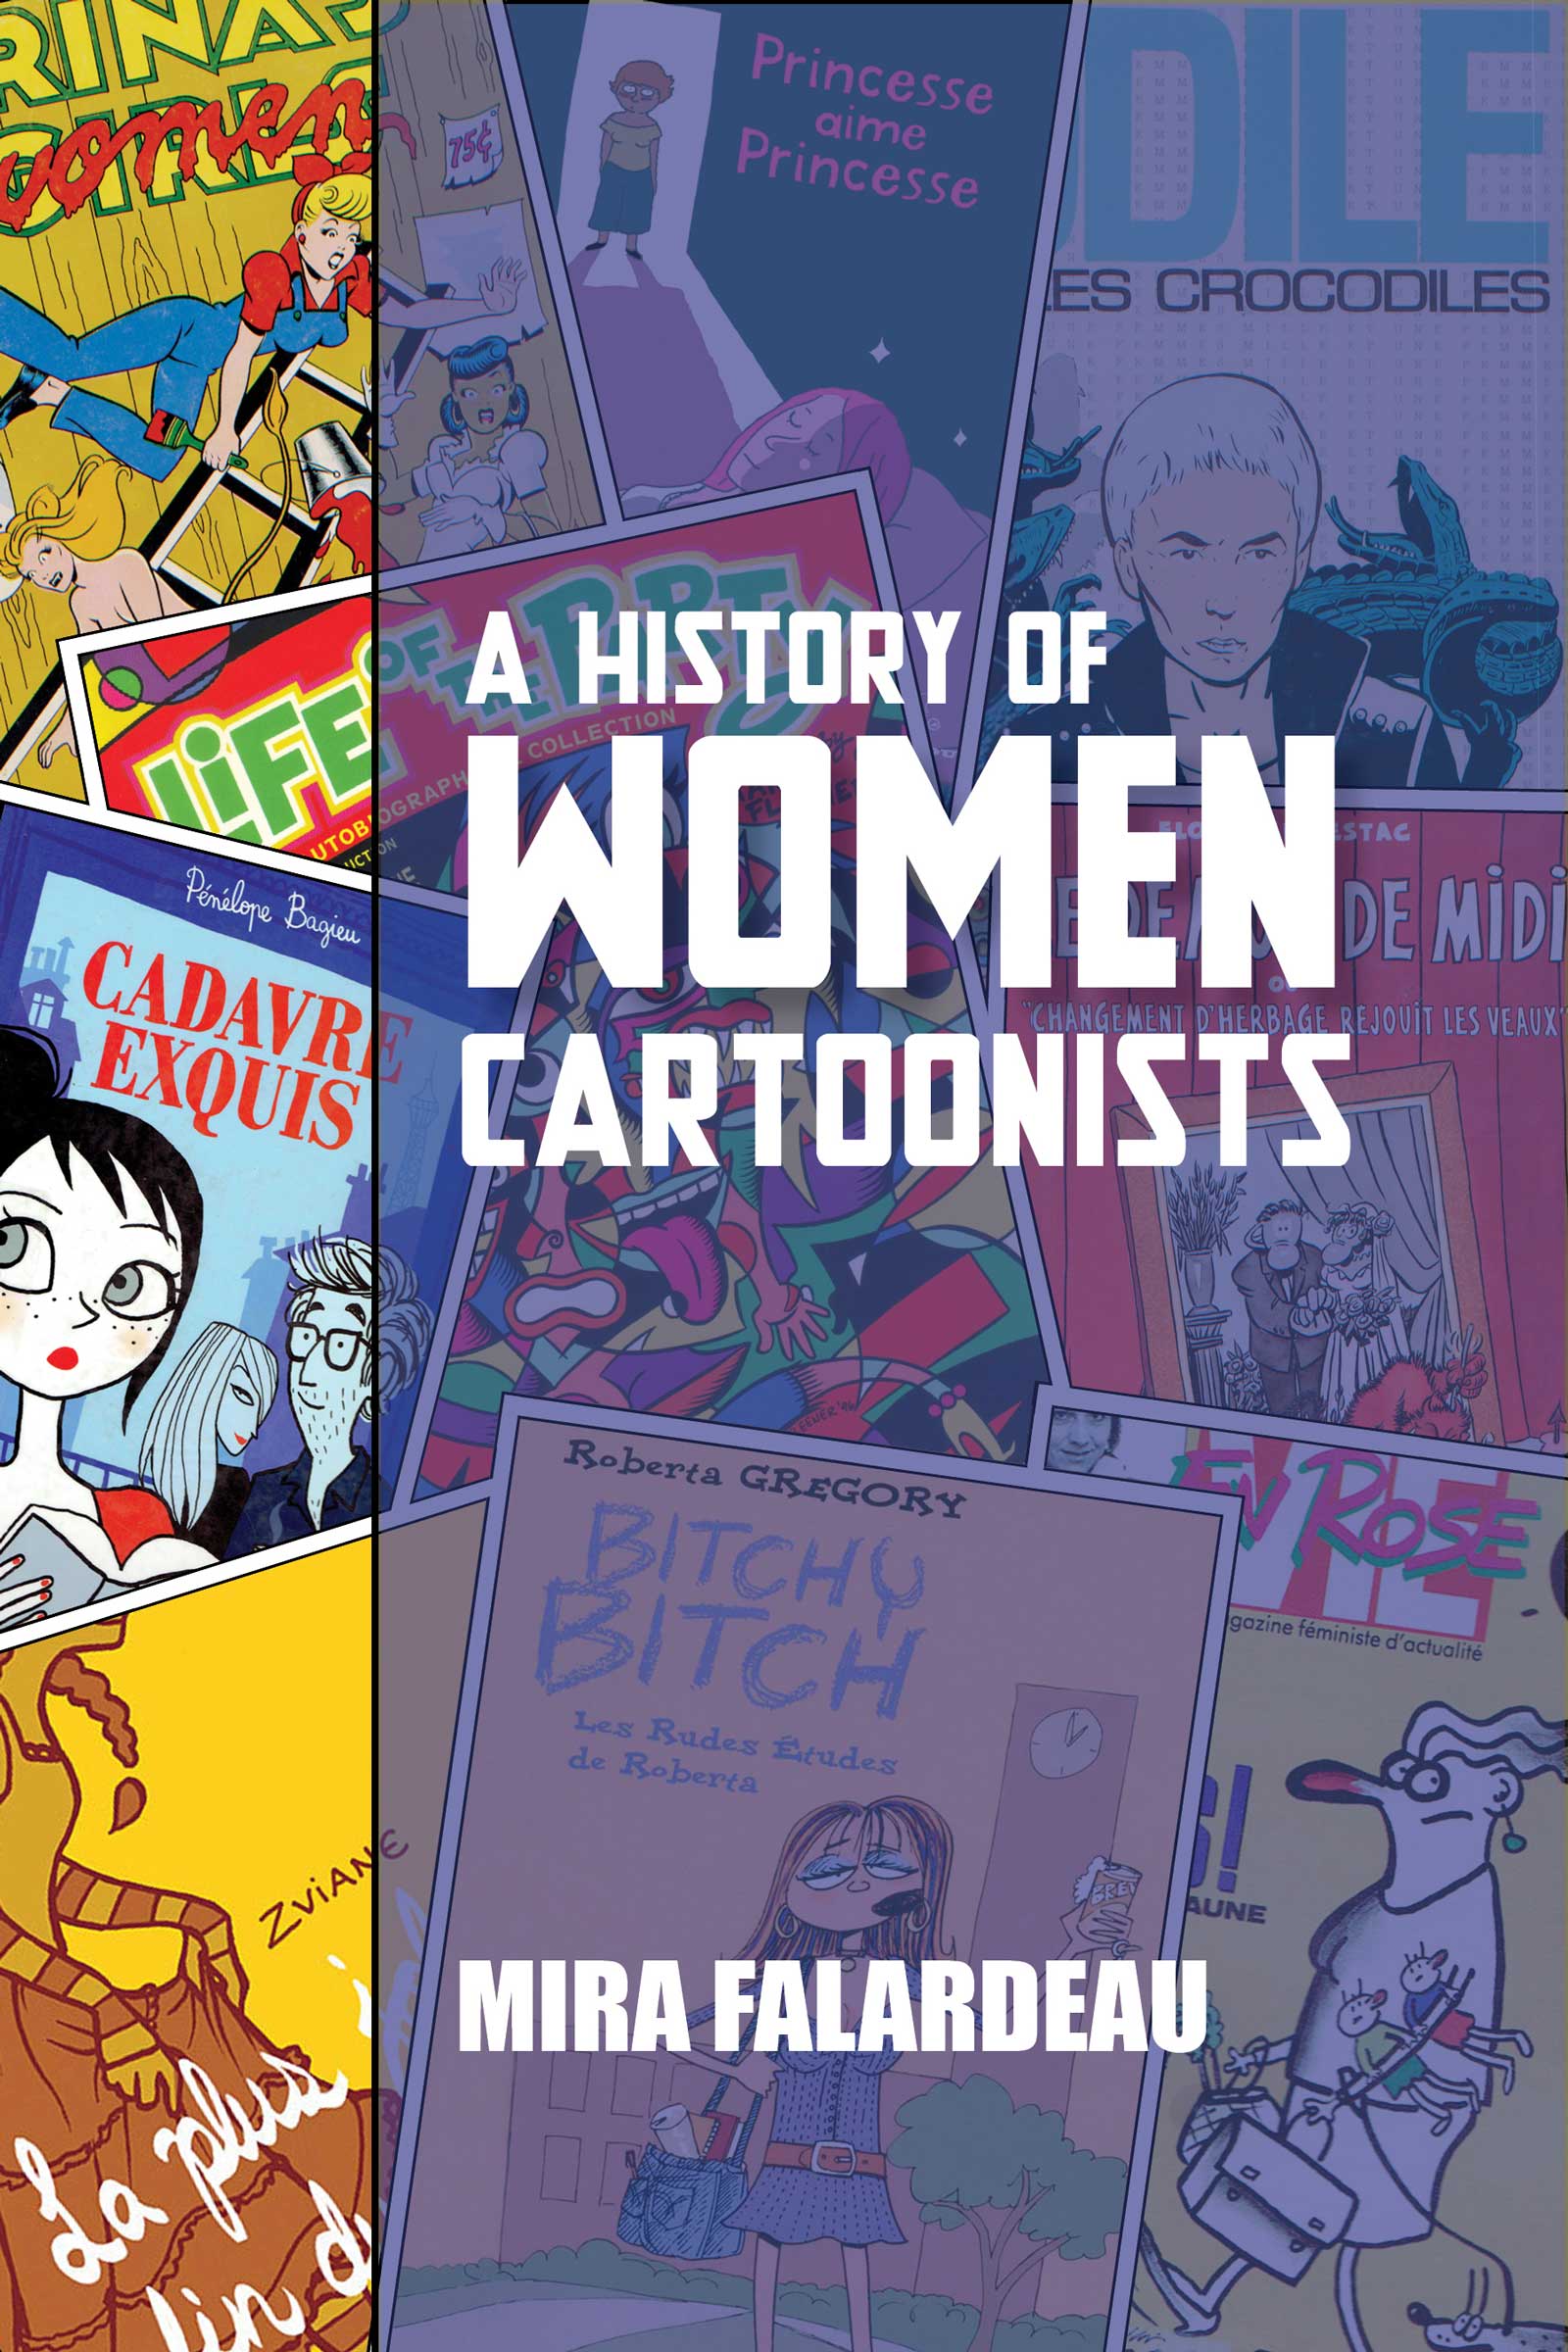 A History of Women Cartoonists by Mira Falardeau